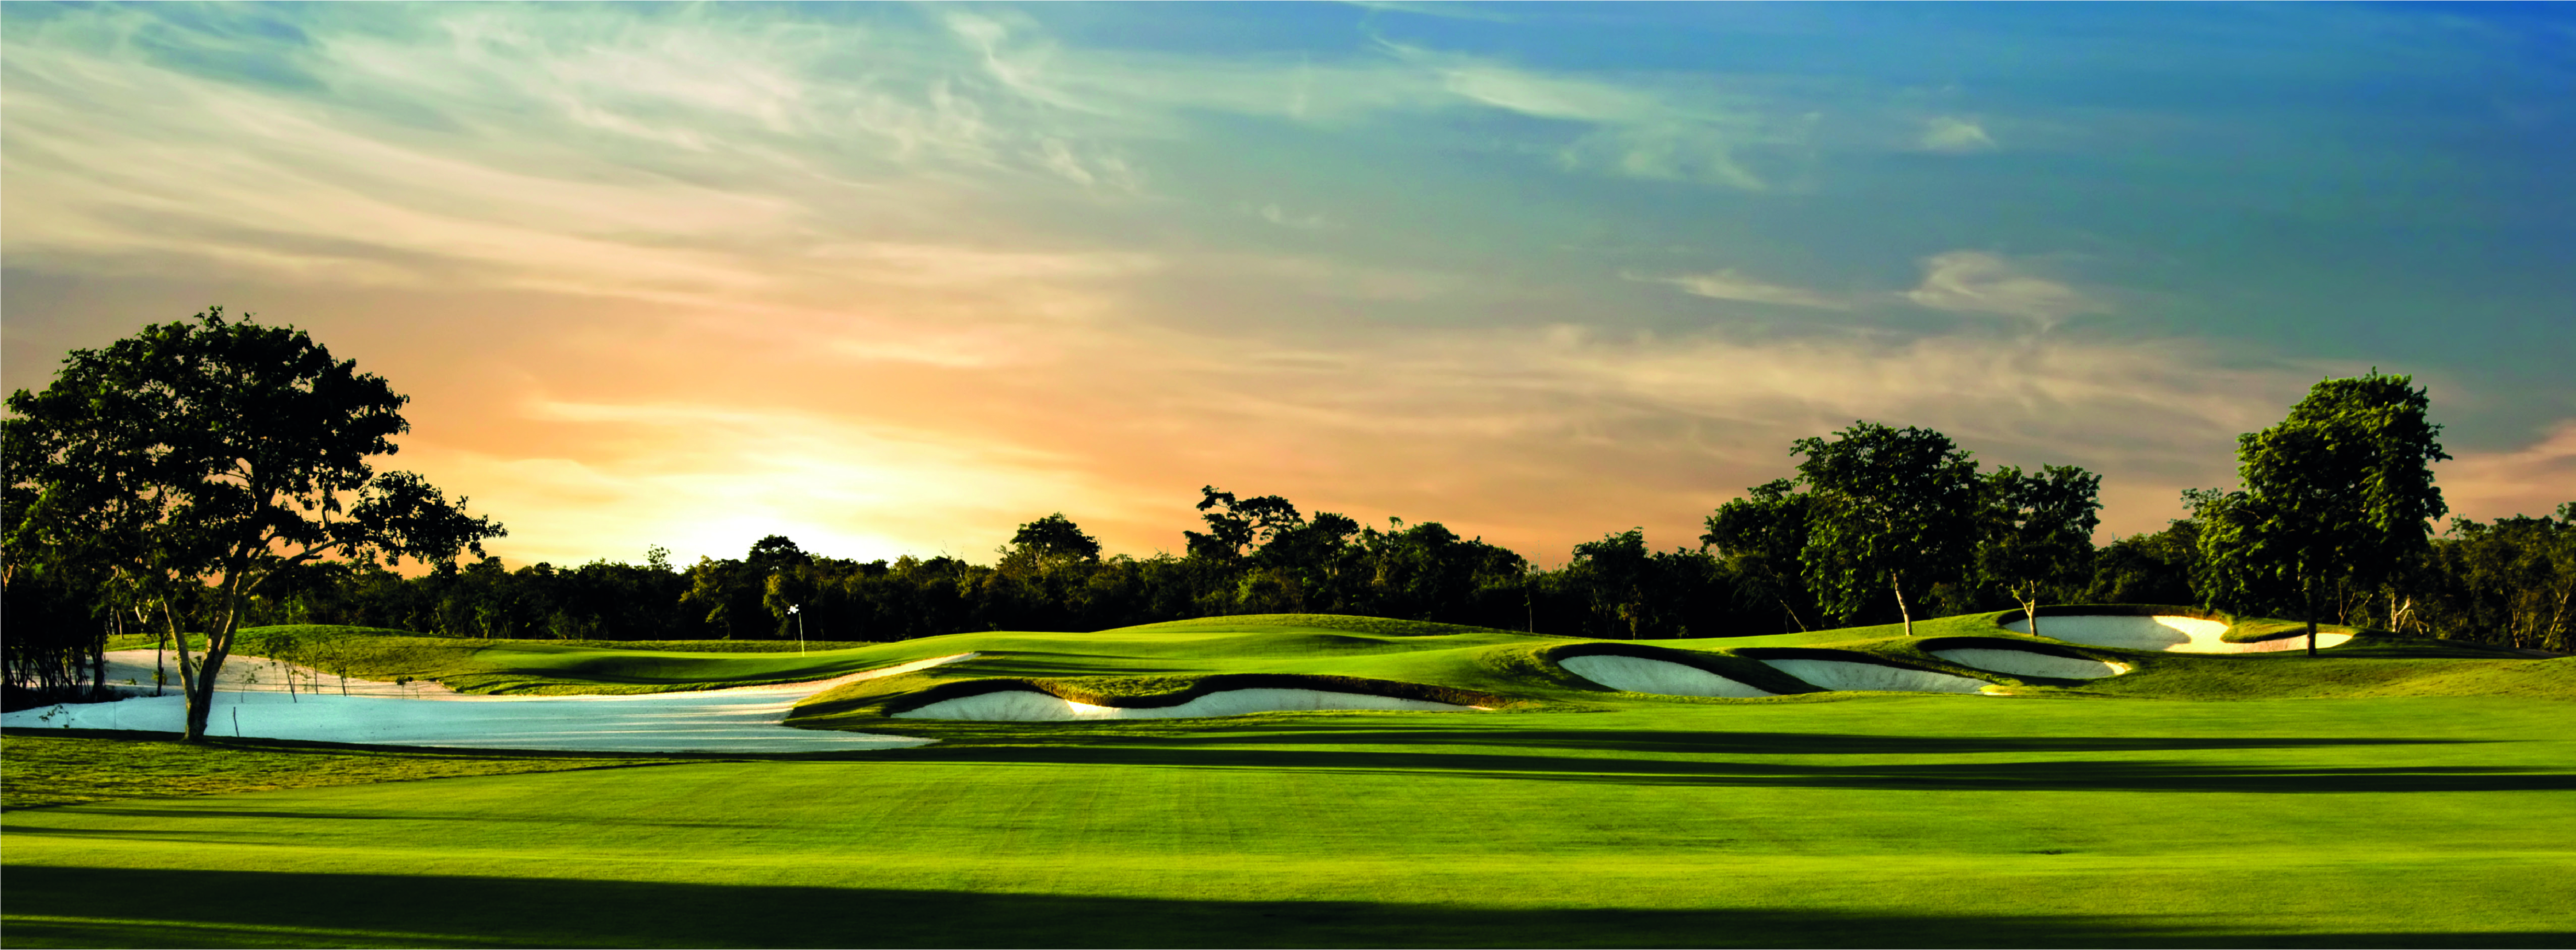 El jaguar golf course. Real state development, Yucatan Country Club. 